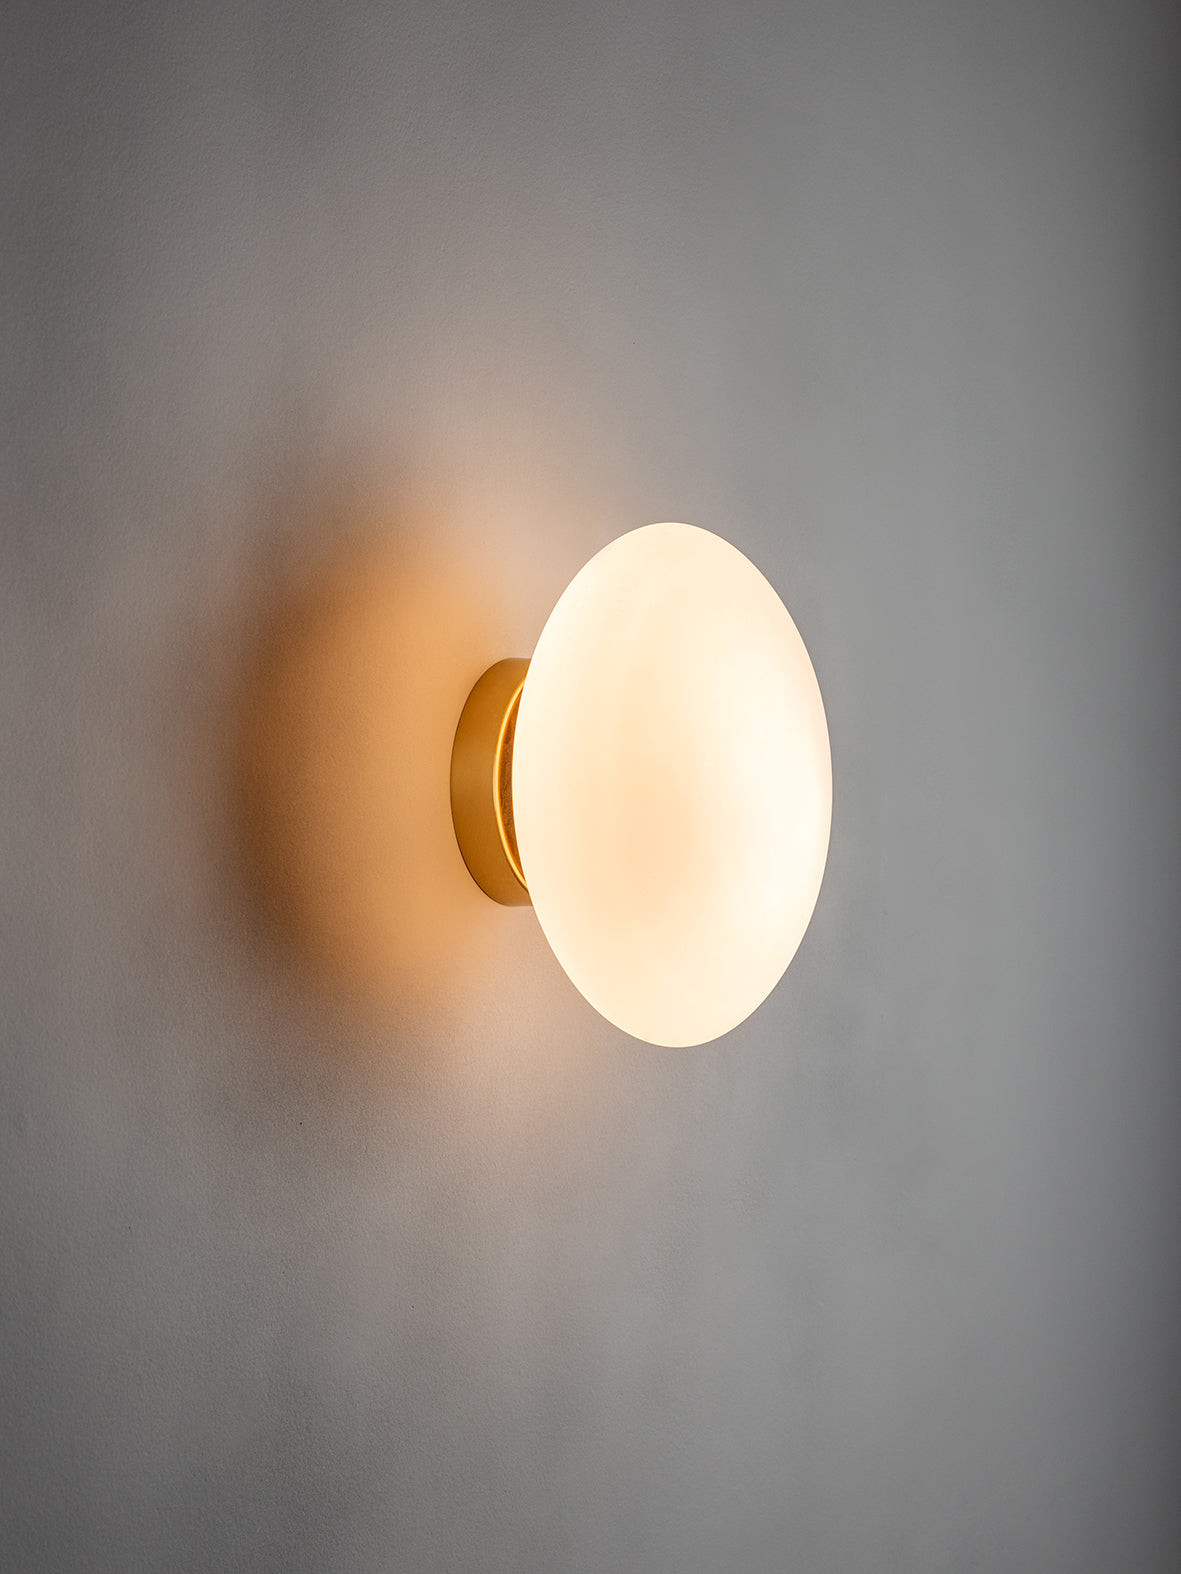 Imperial - wall light | Wall Light | Lights & Lamps | UK | Modern Affordable Designer Lighting